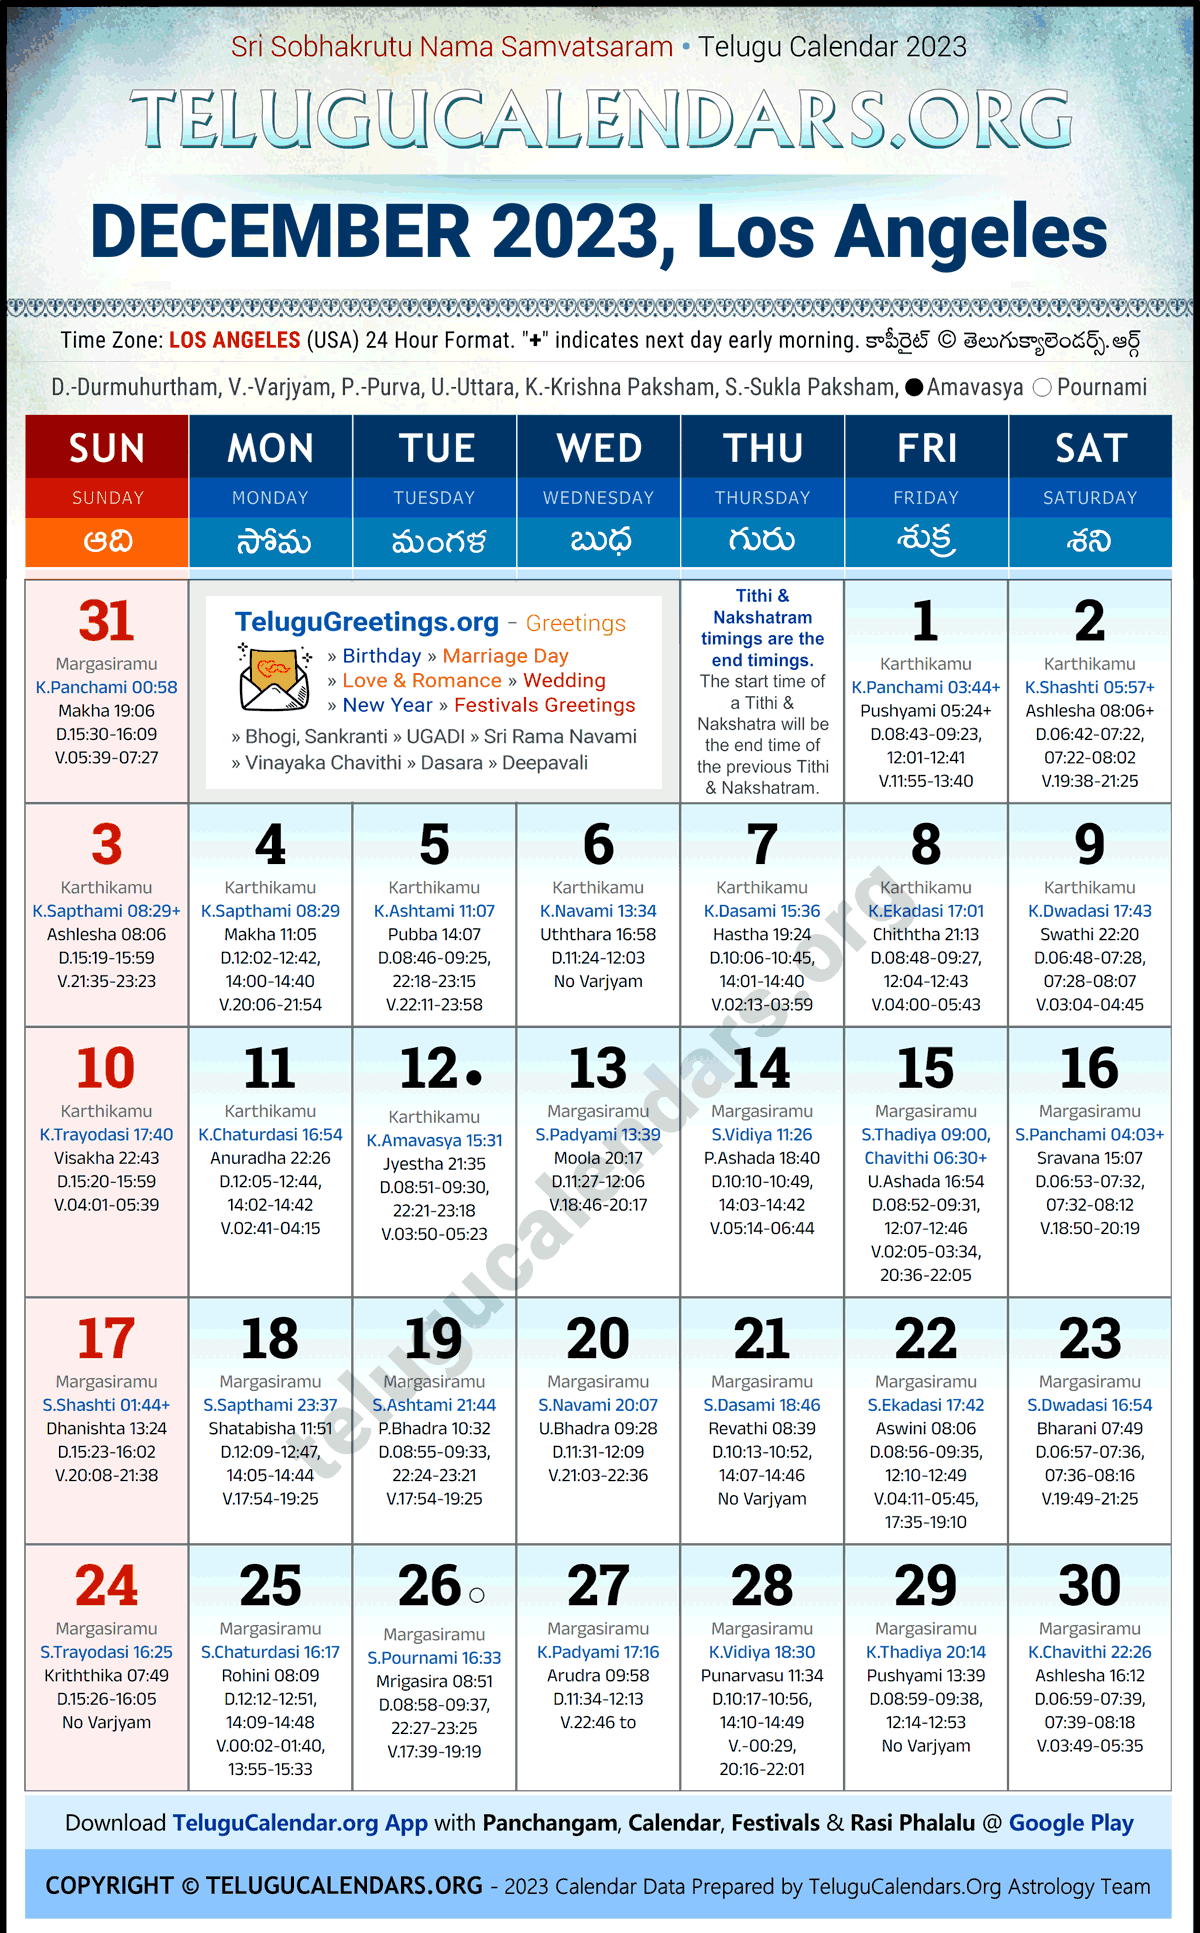 Telugu Calendar 2023 December Festivals for Los Angeles